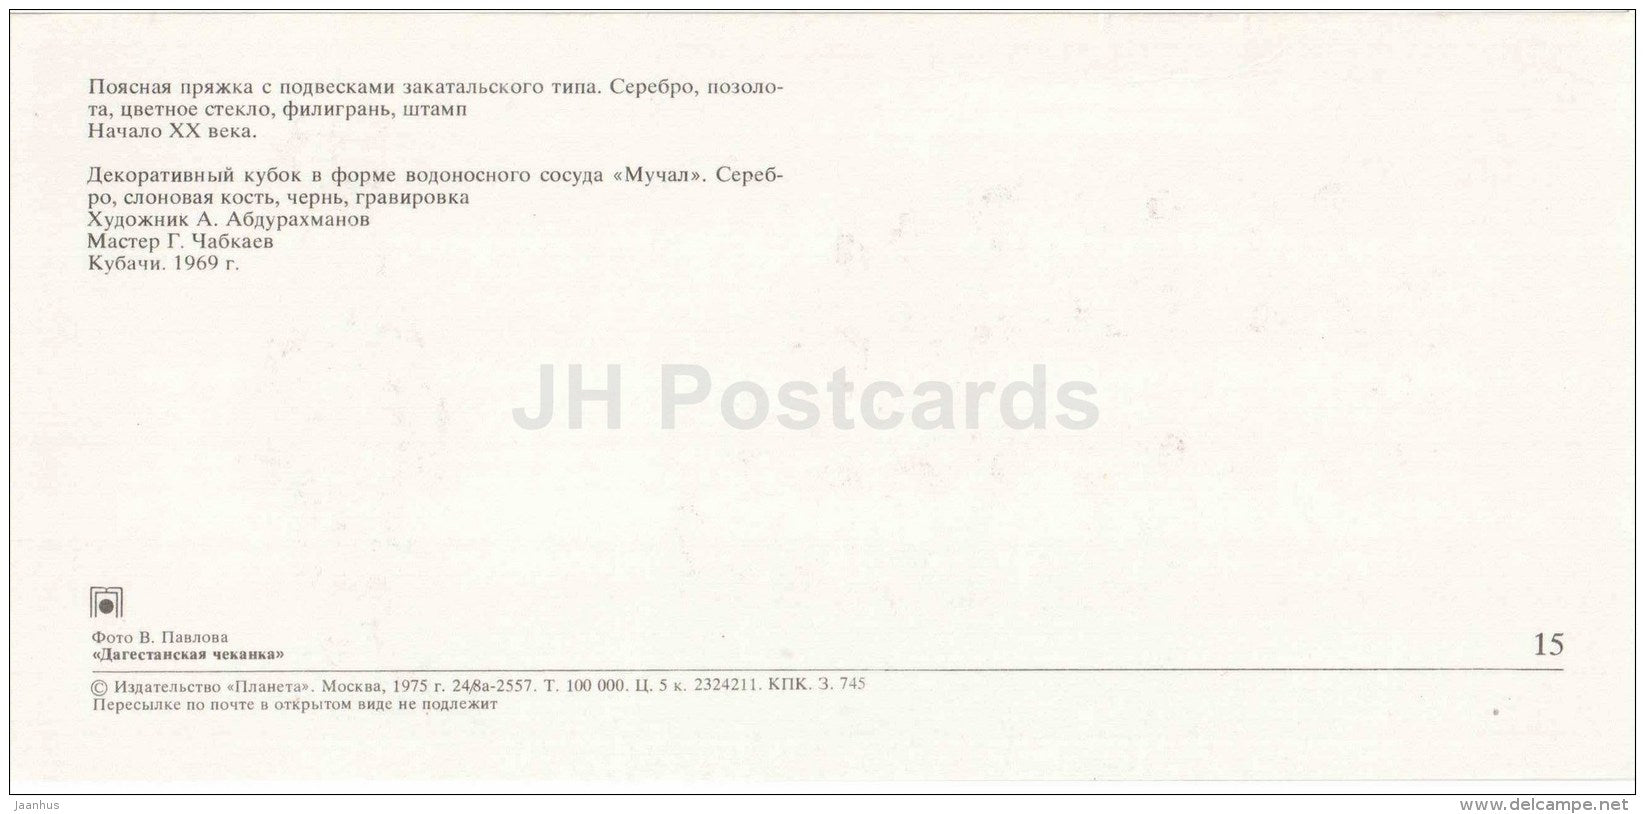 belt buckle - decorative cup - silver - Dagestan Hammering - Toreutics - 1975 - Russia USSR - unused - JH Postcards